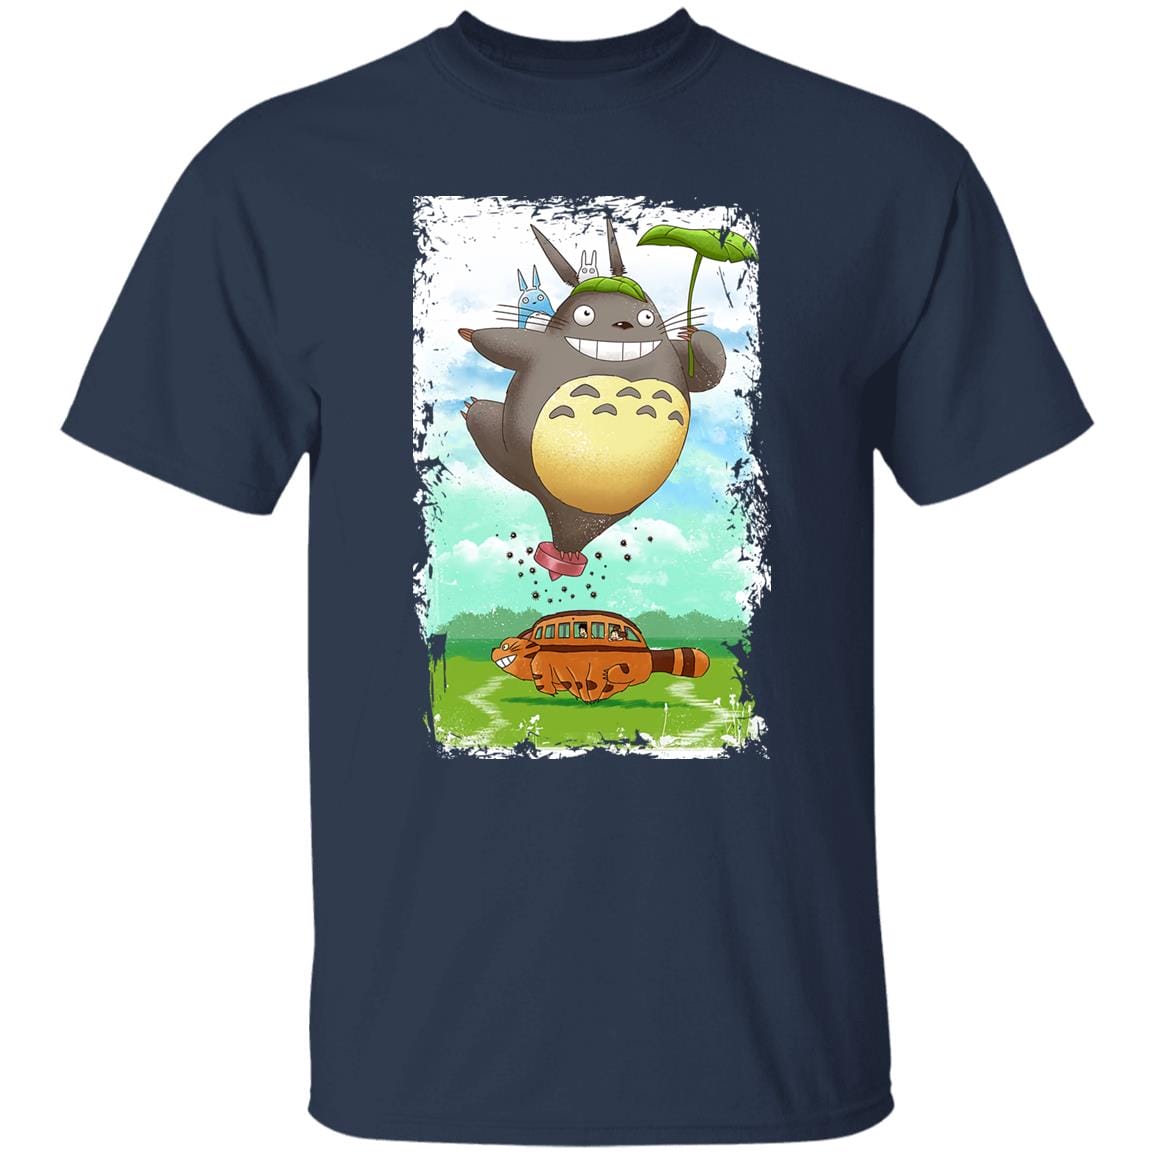 Totoro the Funny Neighbor T Shirt